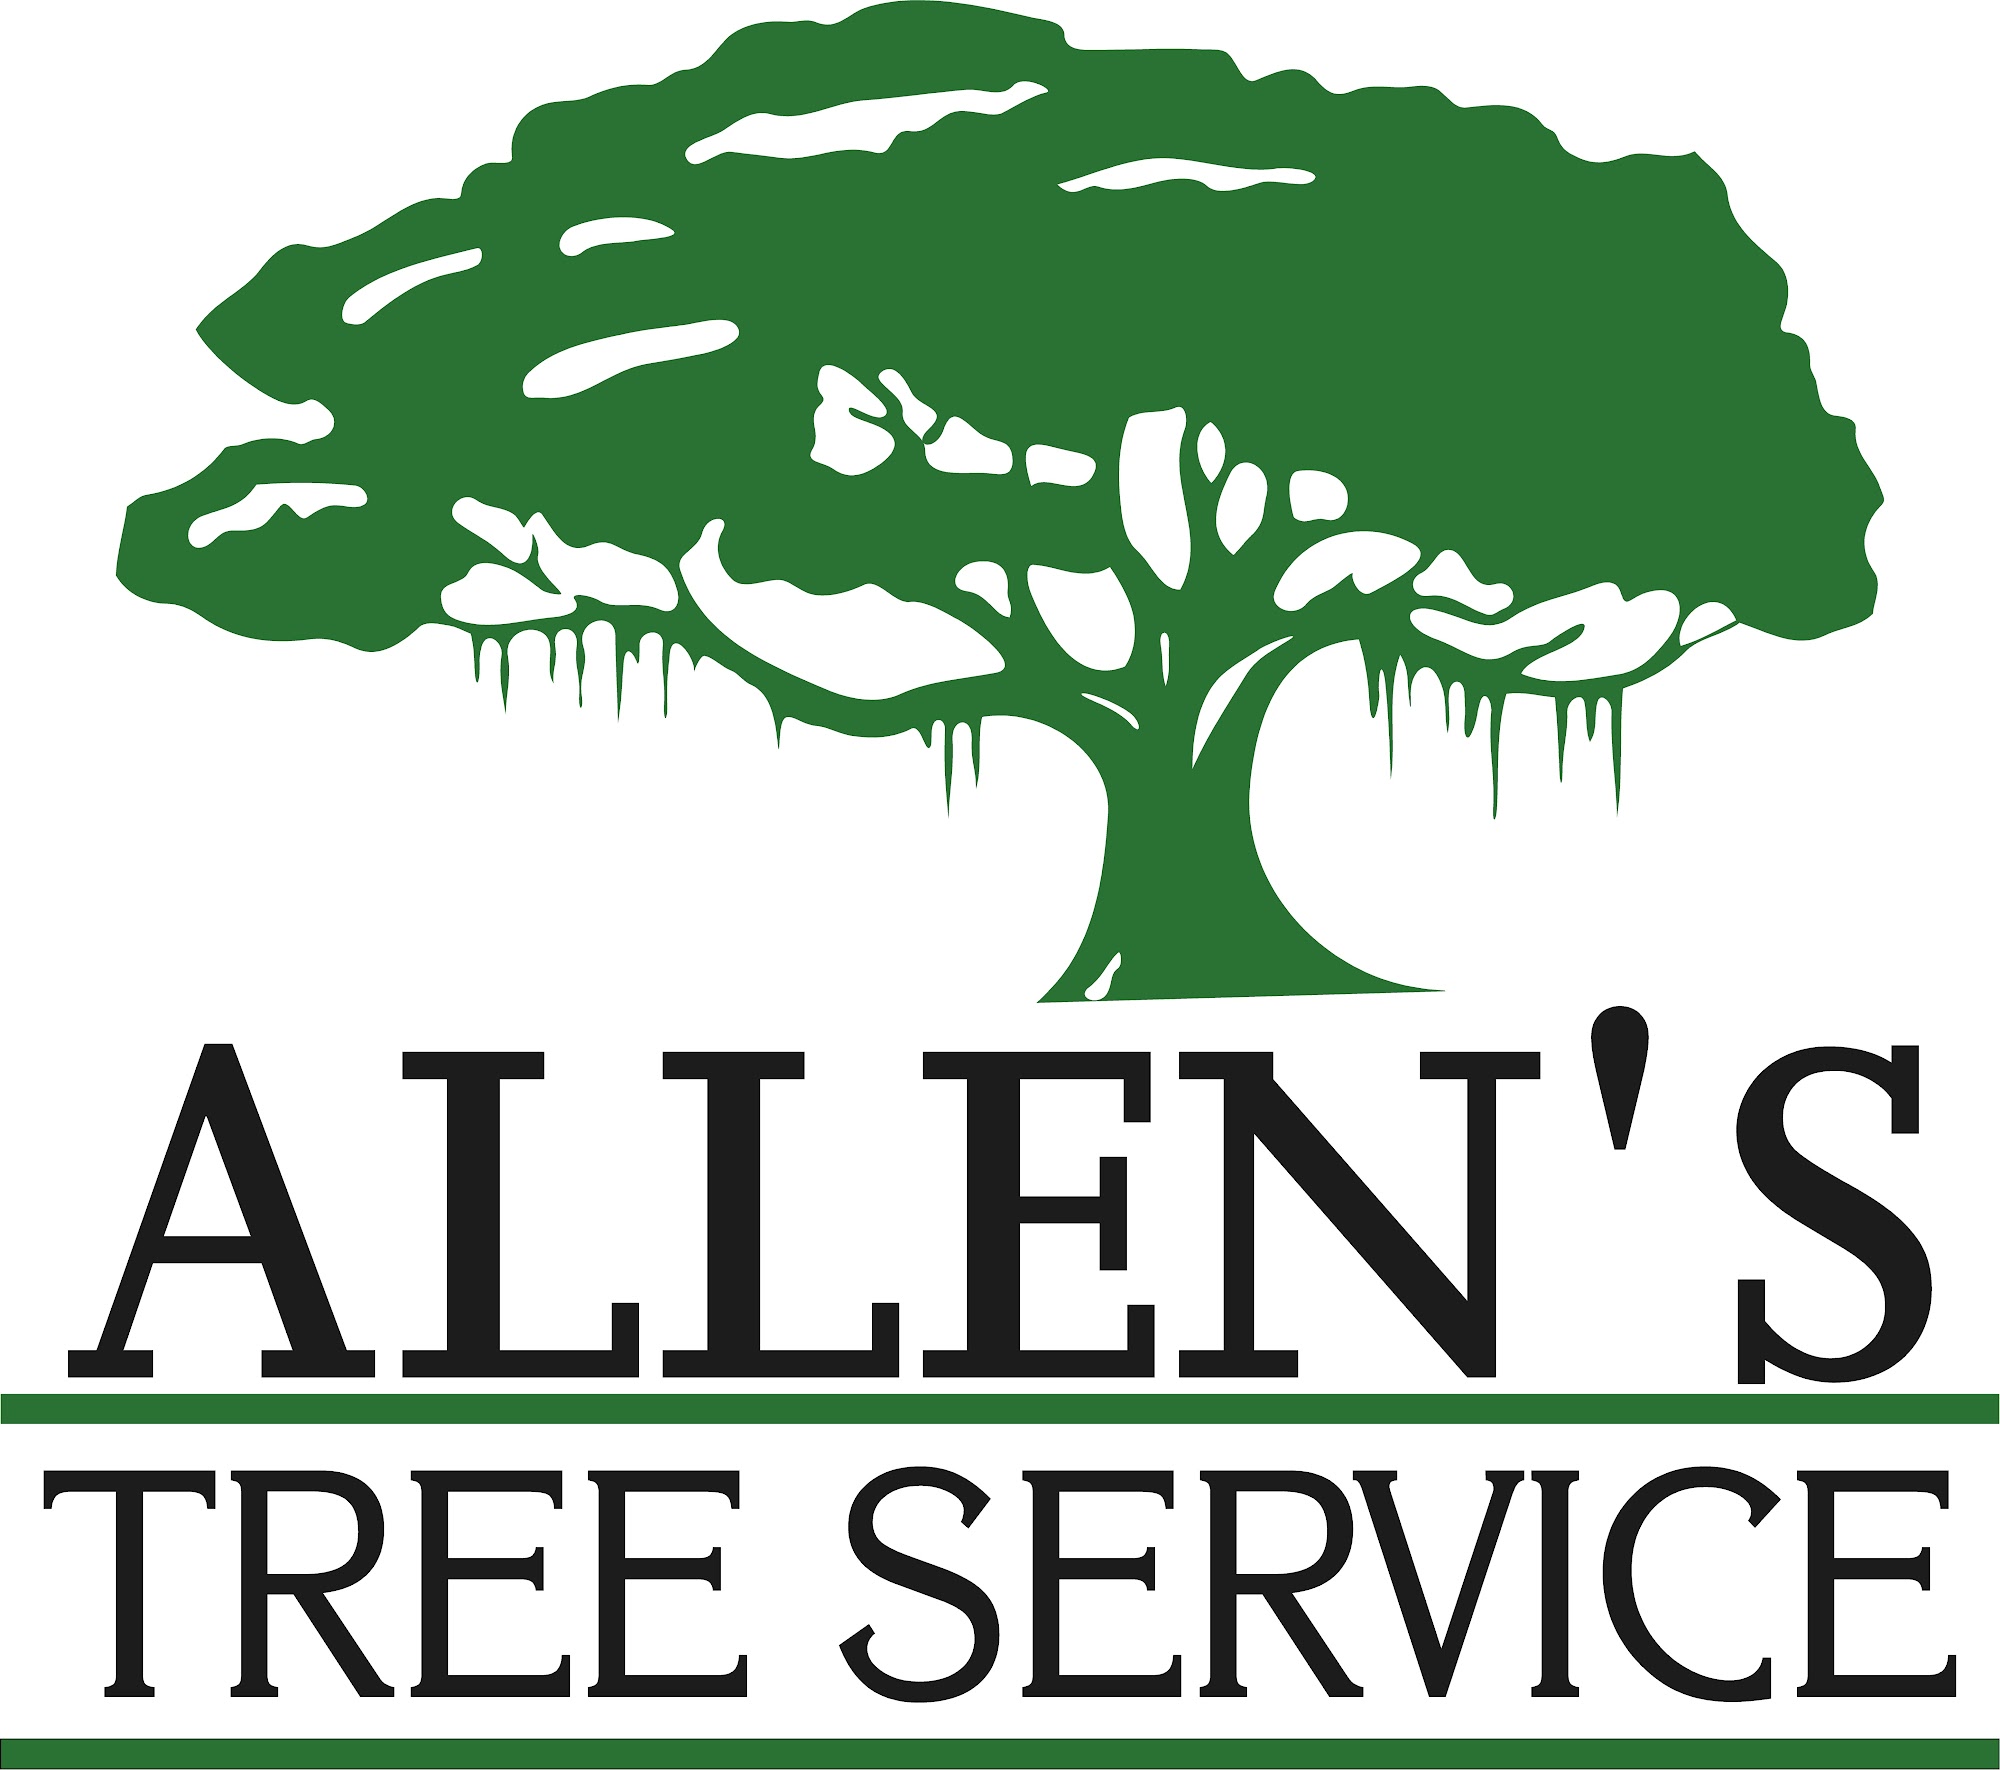 Allen's Tree Service 375 Halifax Rd, Woodbine Georgia 31569